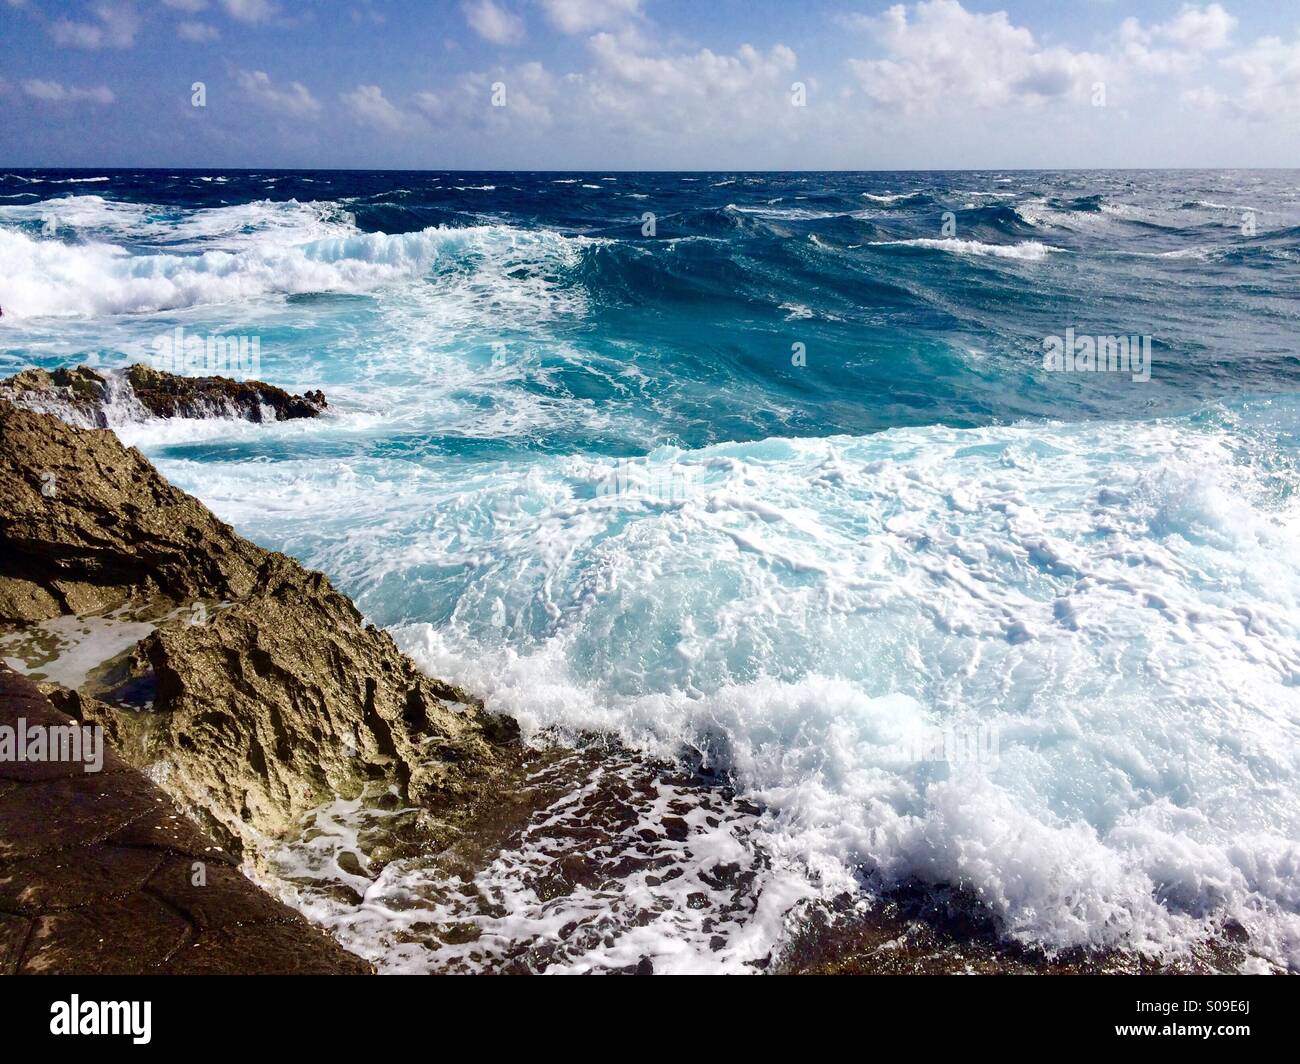 Water crashing onto rocks, Punta Sur, Isla Mujeres, Mexico Stock Photo